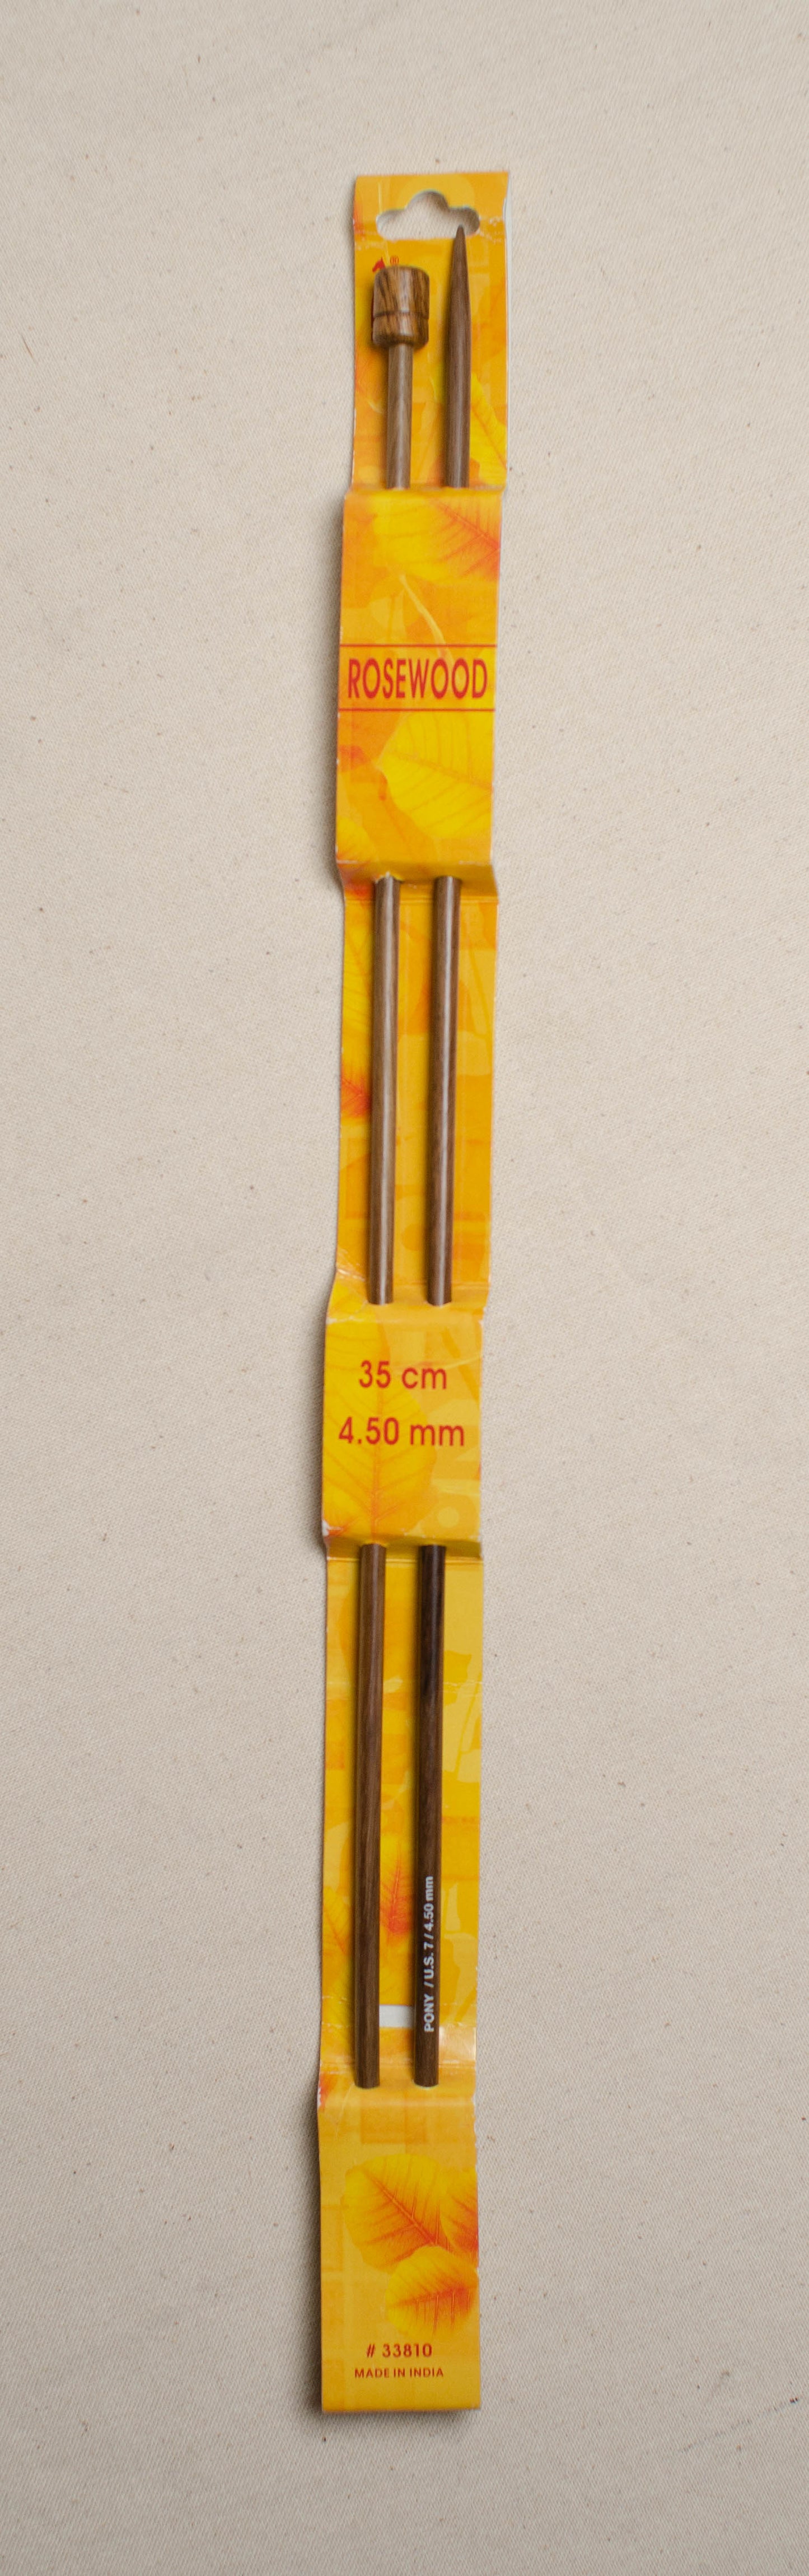 Pony Rosewood 35cm Knitting Needles - 35cm X 4.50mm